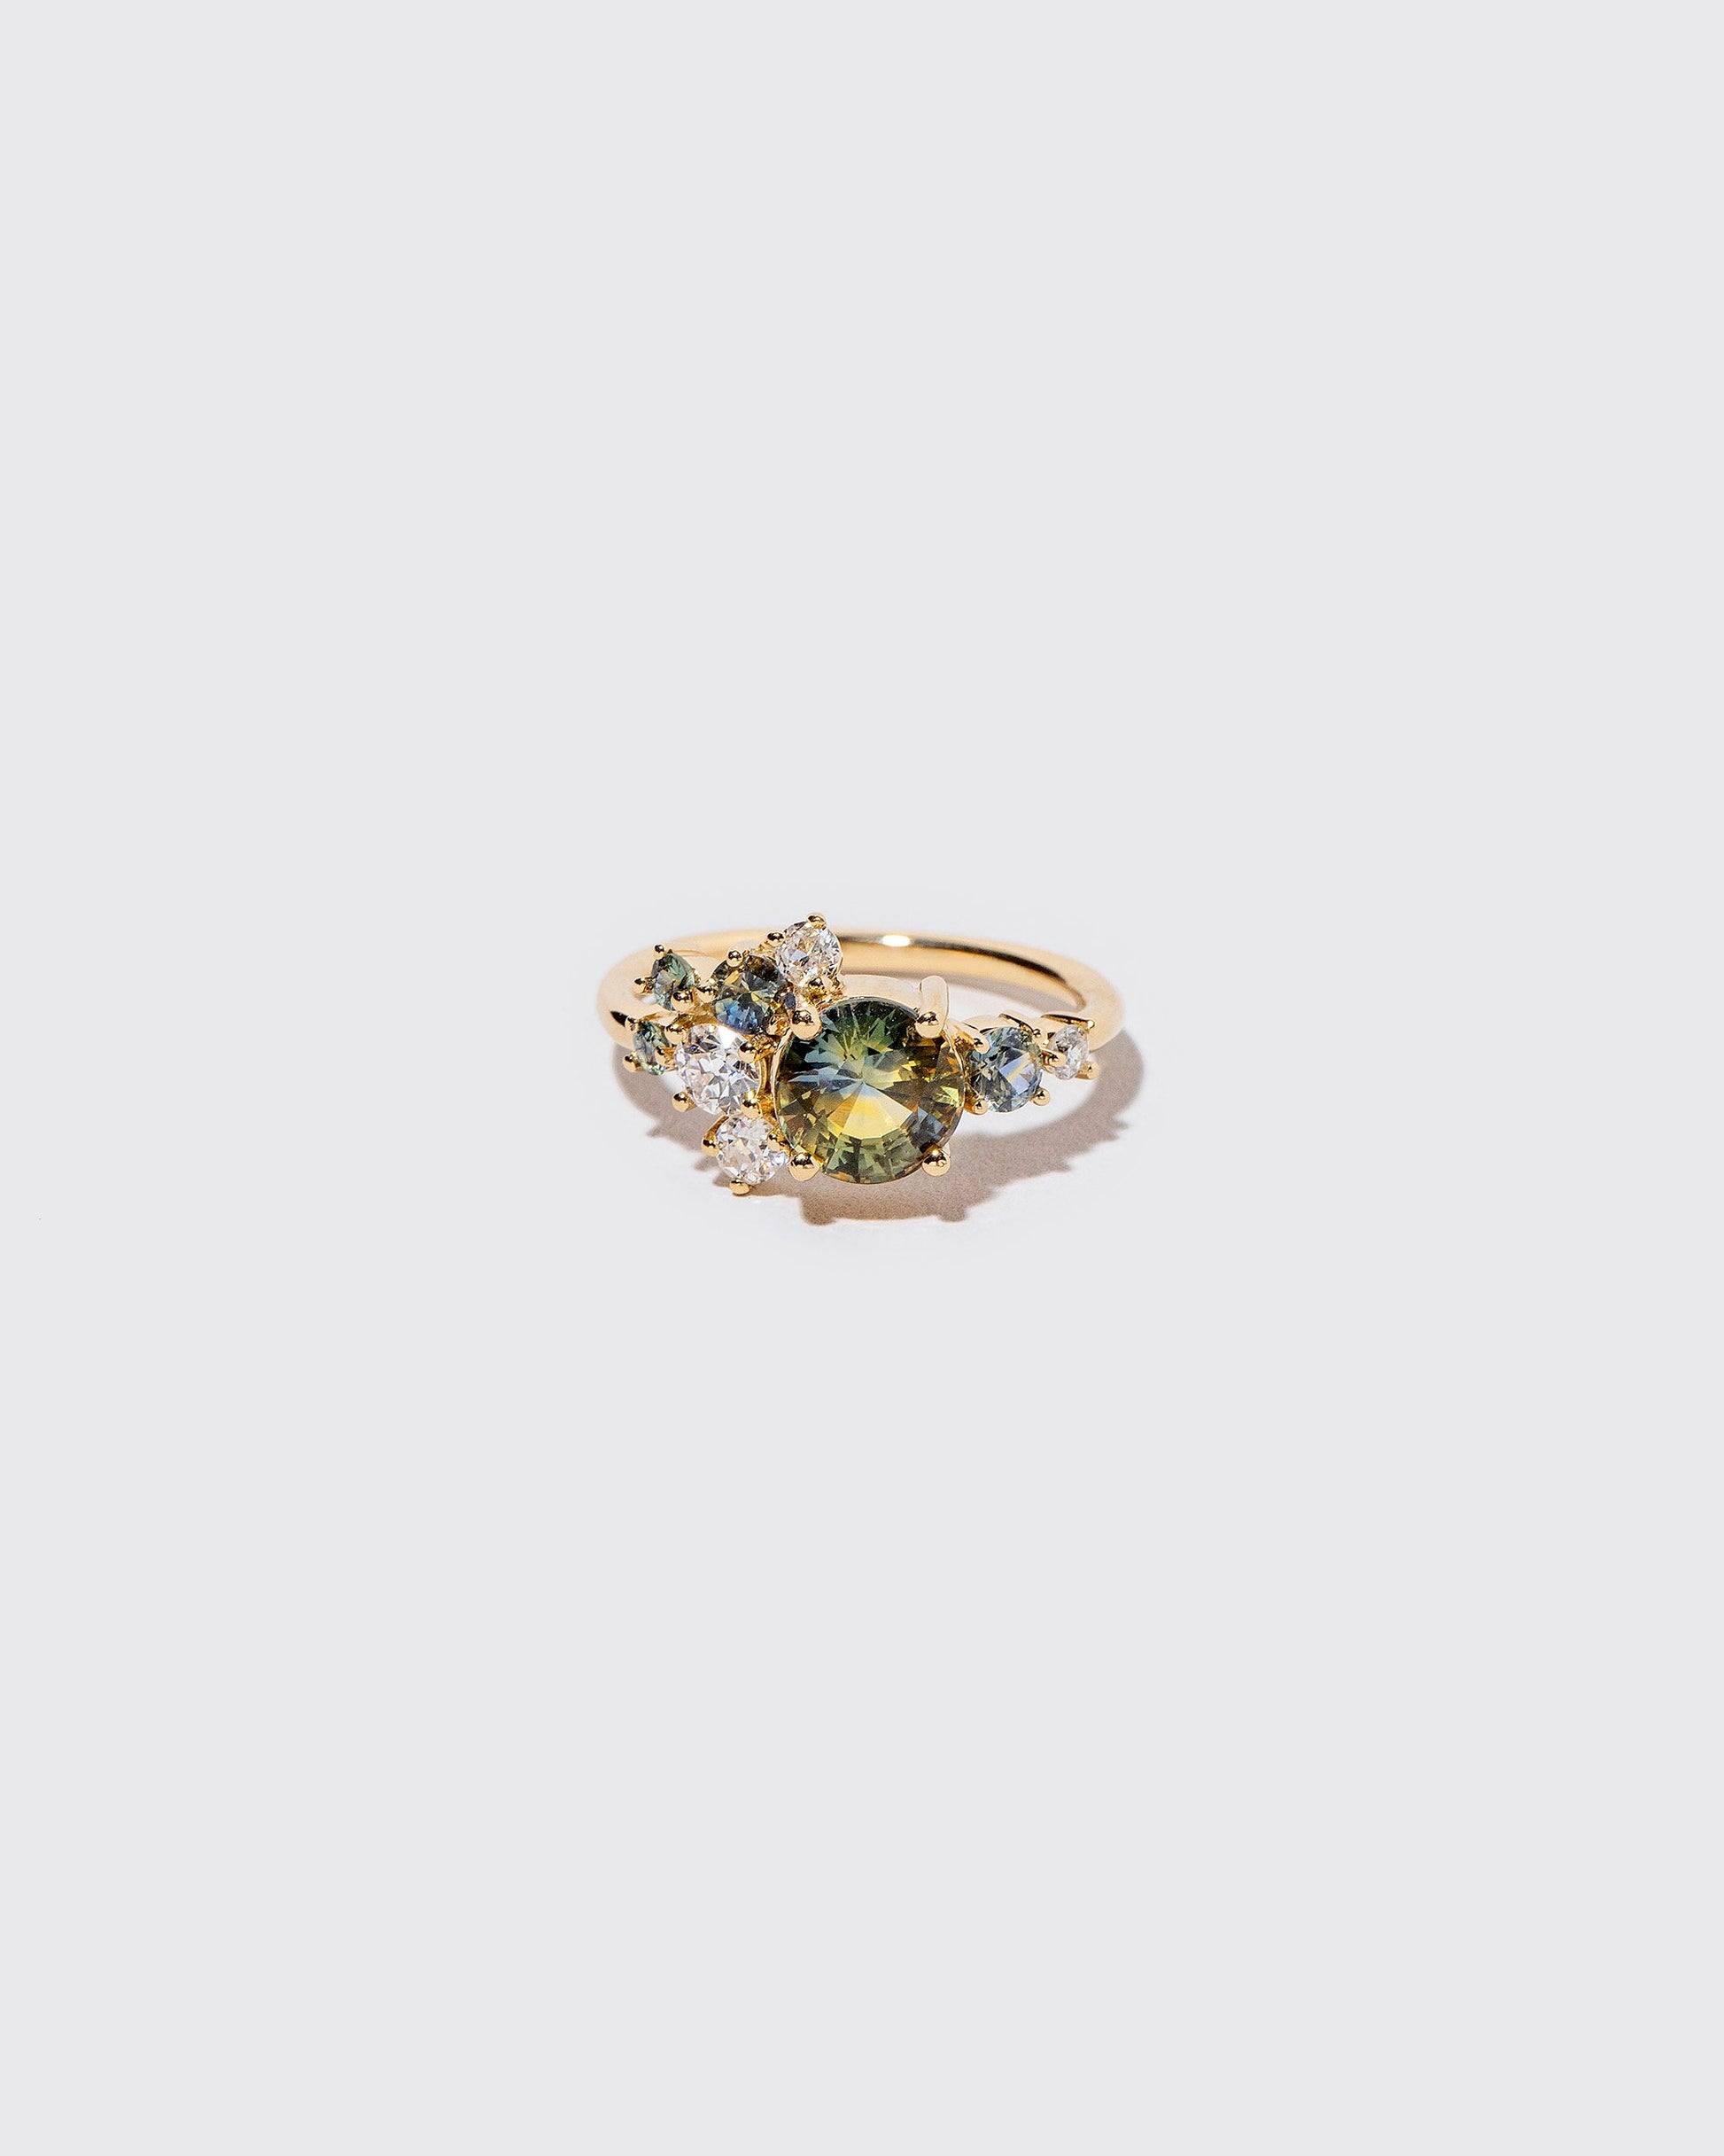  Vega Ring - Bicolor Sapphires on light color background.